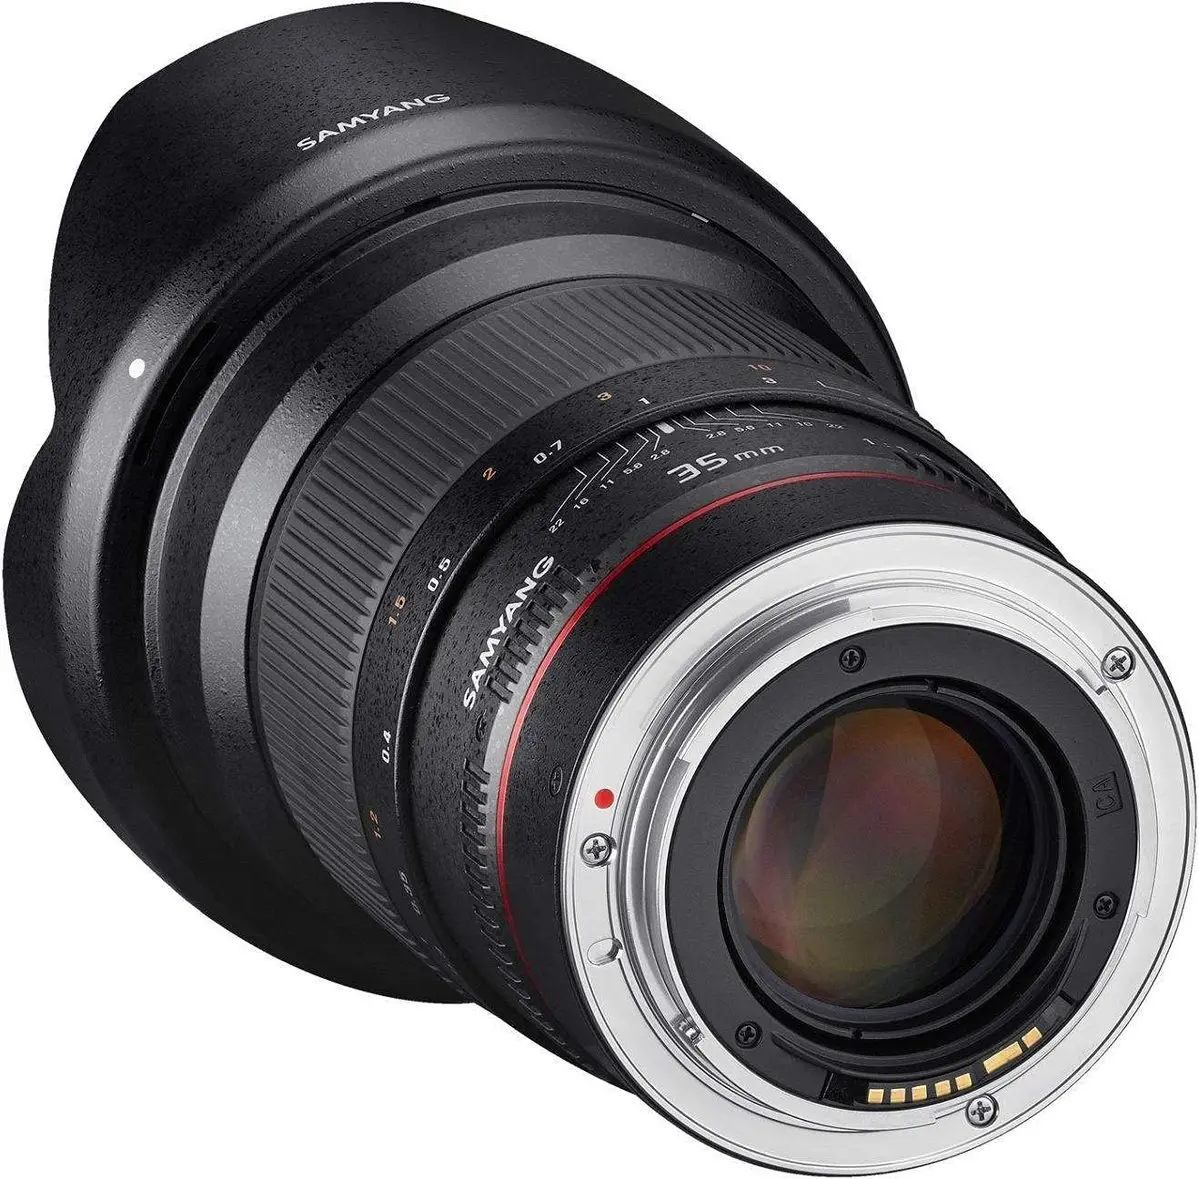 1. Samyang 35mm f/1.4 AS UMC (Canon AE Version) Lens